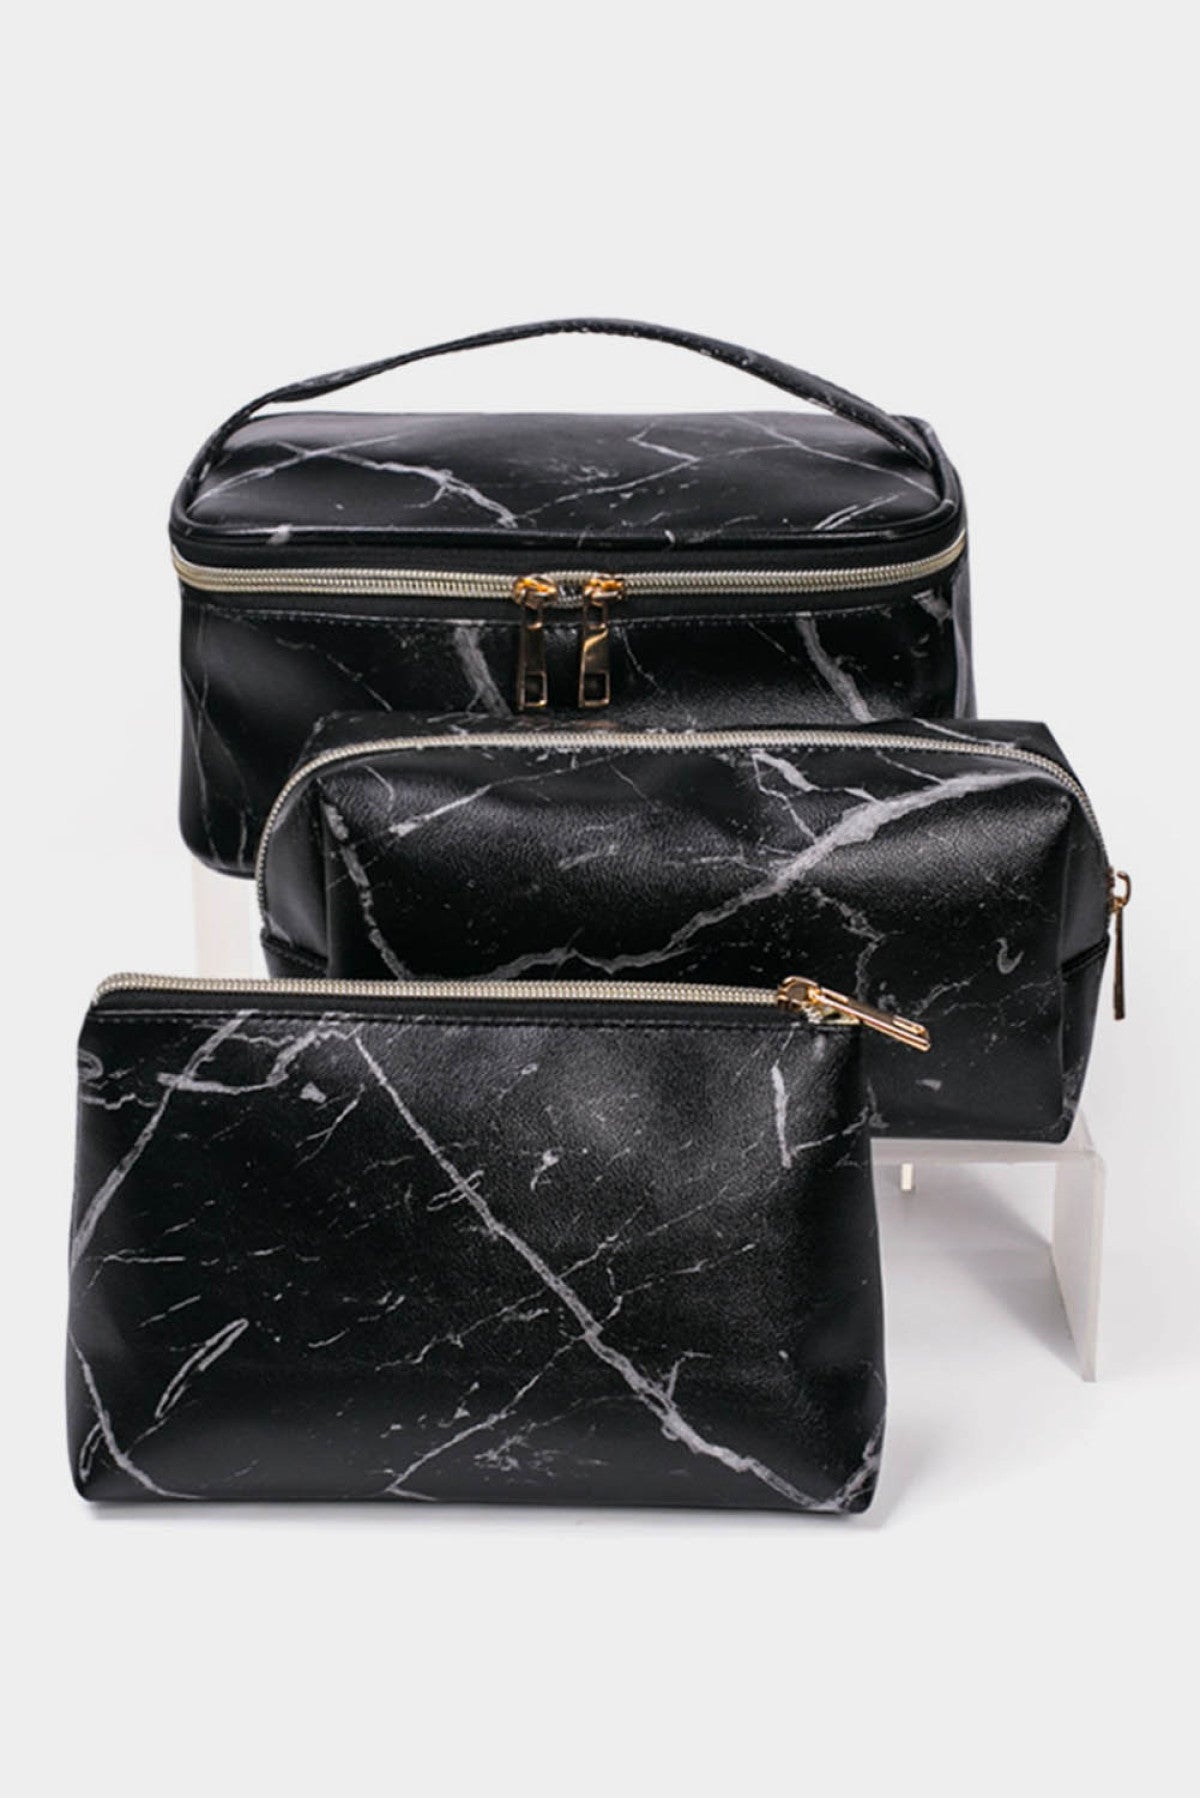 Three-Piece Zipper PU Leather Cosmetic Bag